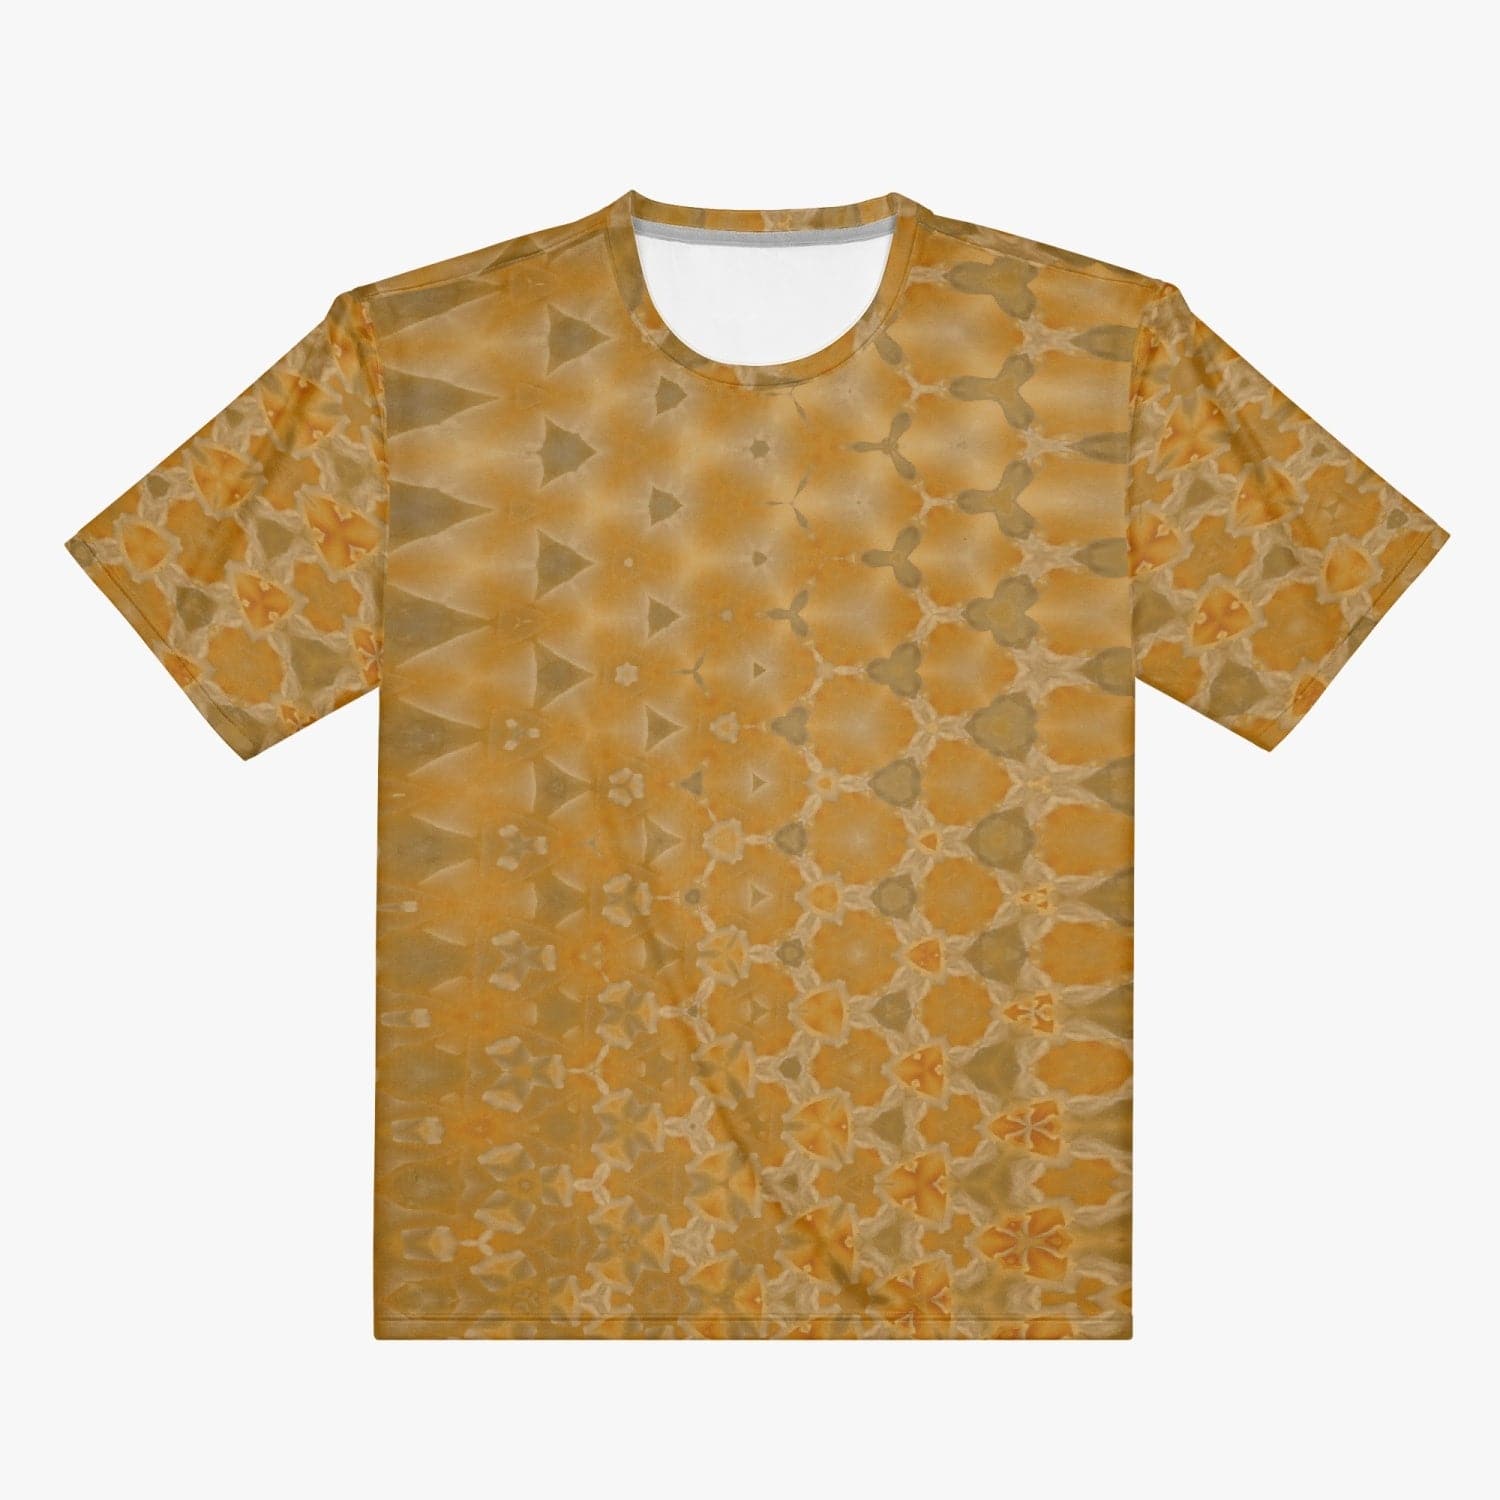 Orange Active Wear Patterned Handmade T-shirt for Men